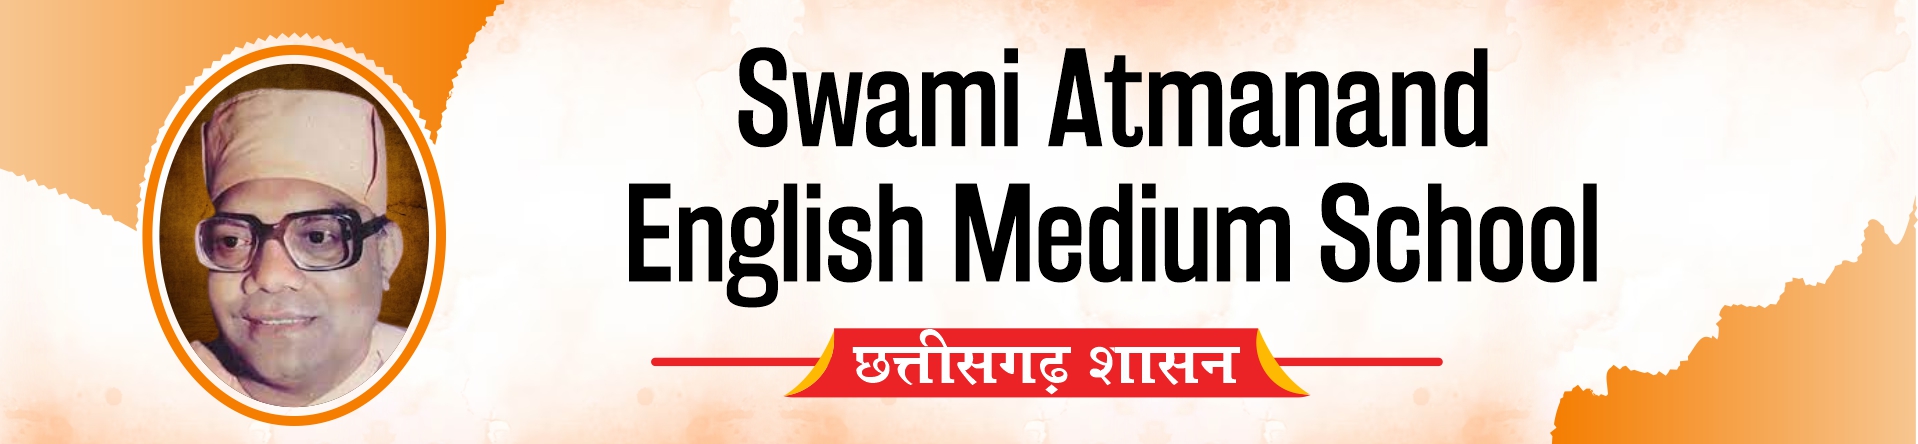 SAEMS: Swami Atmanand English Medium school